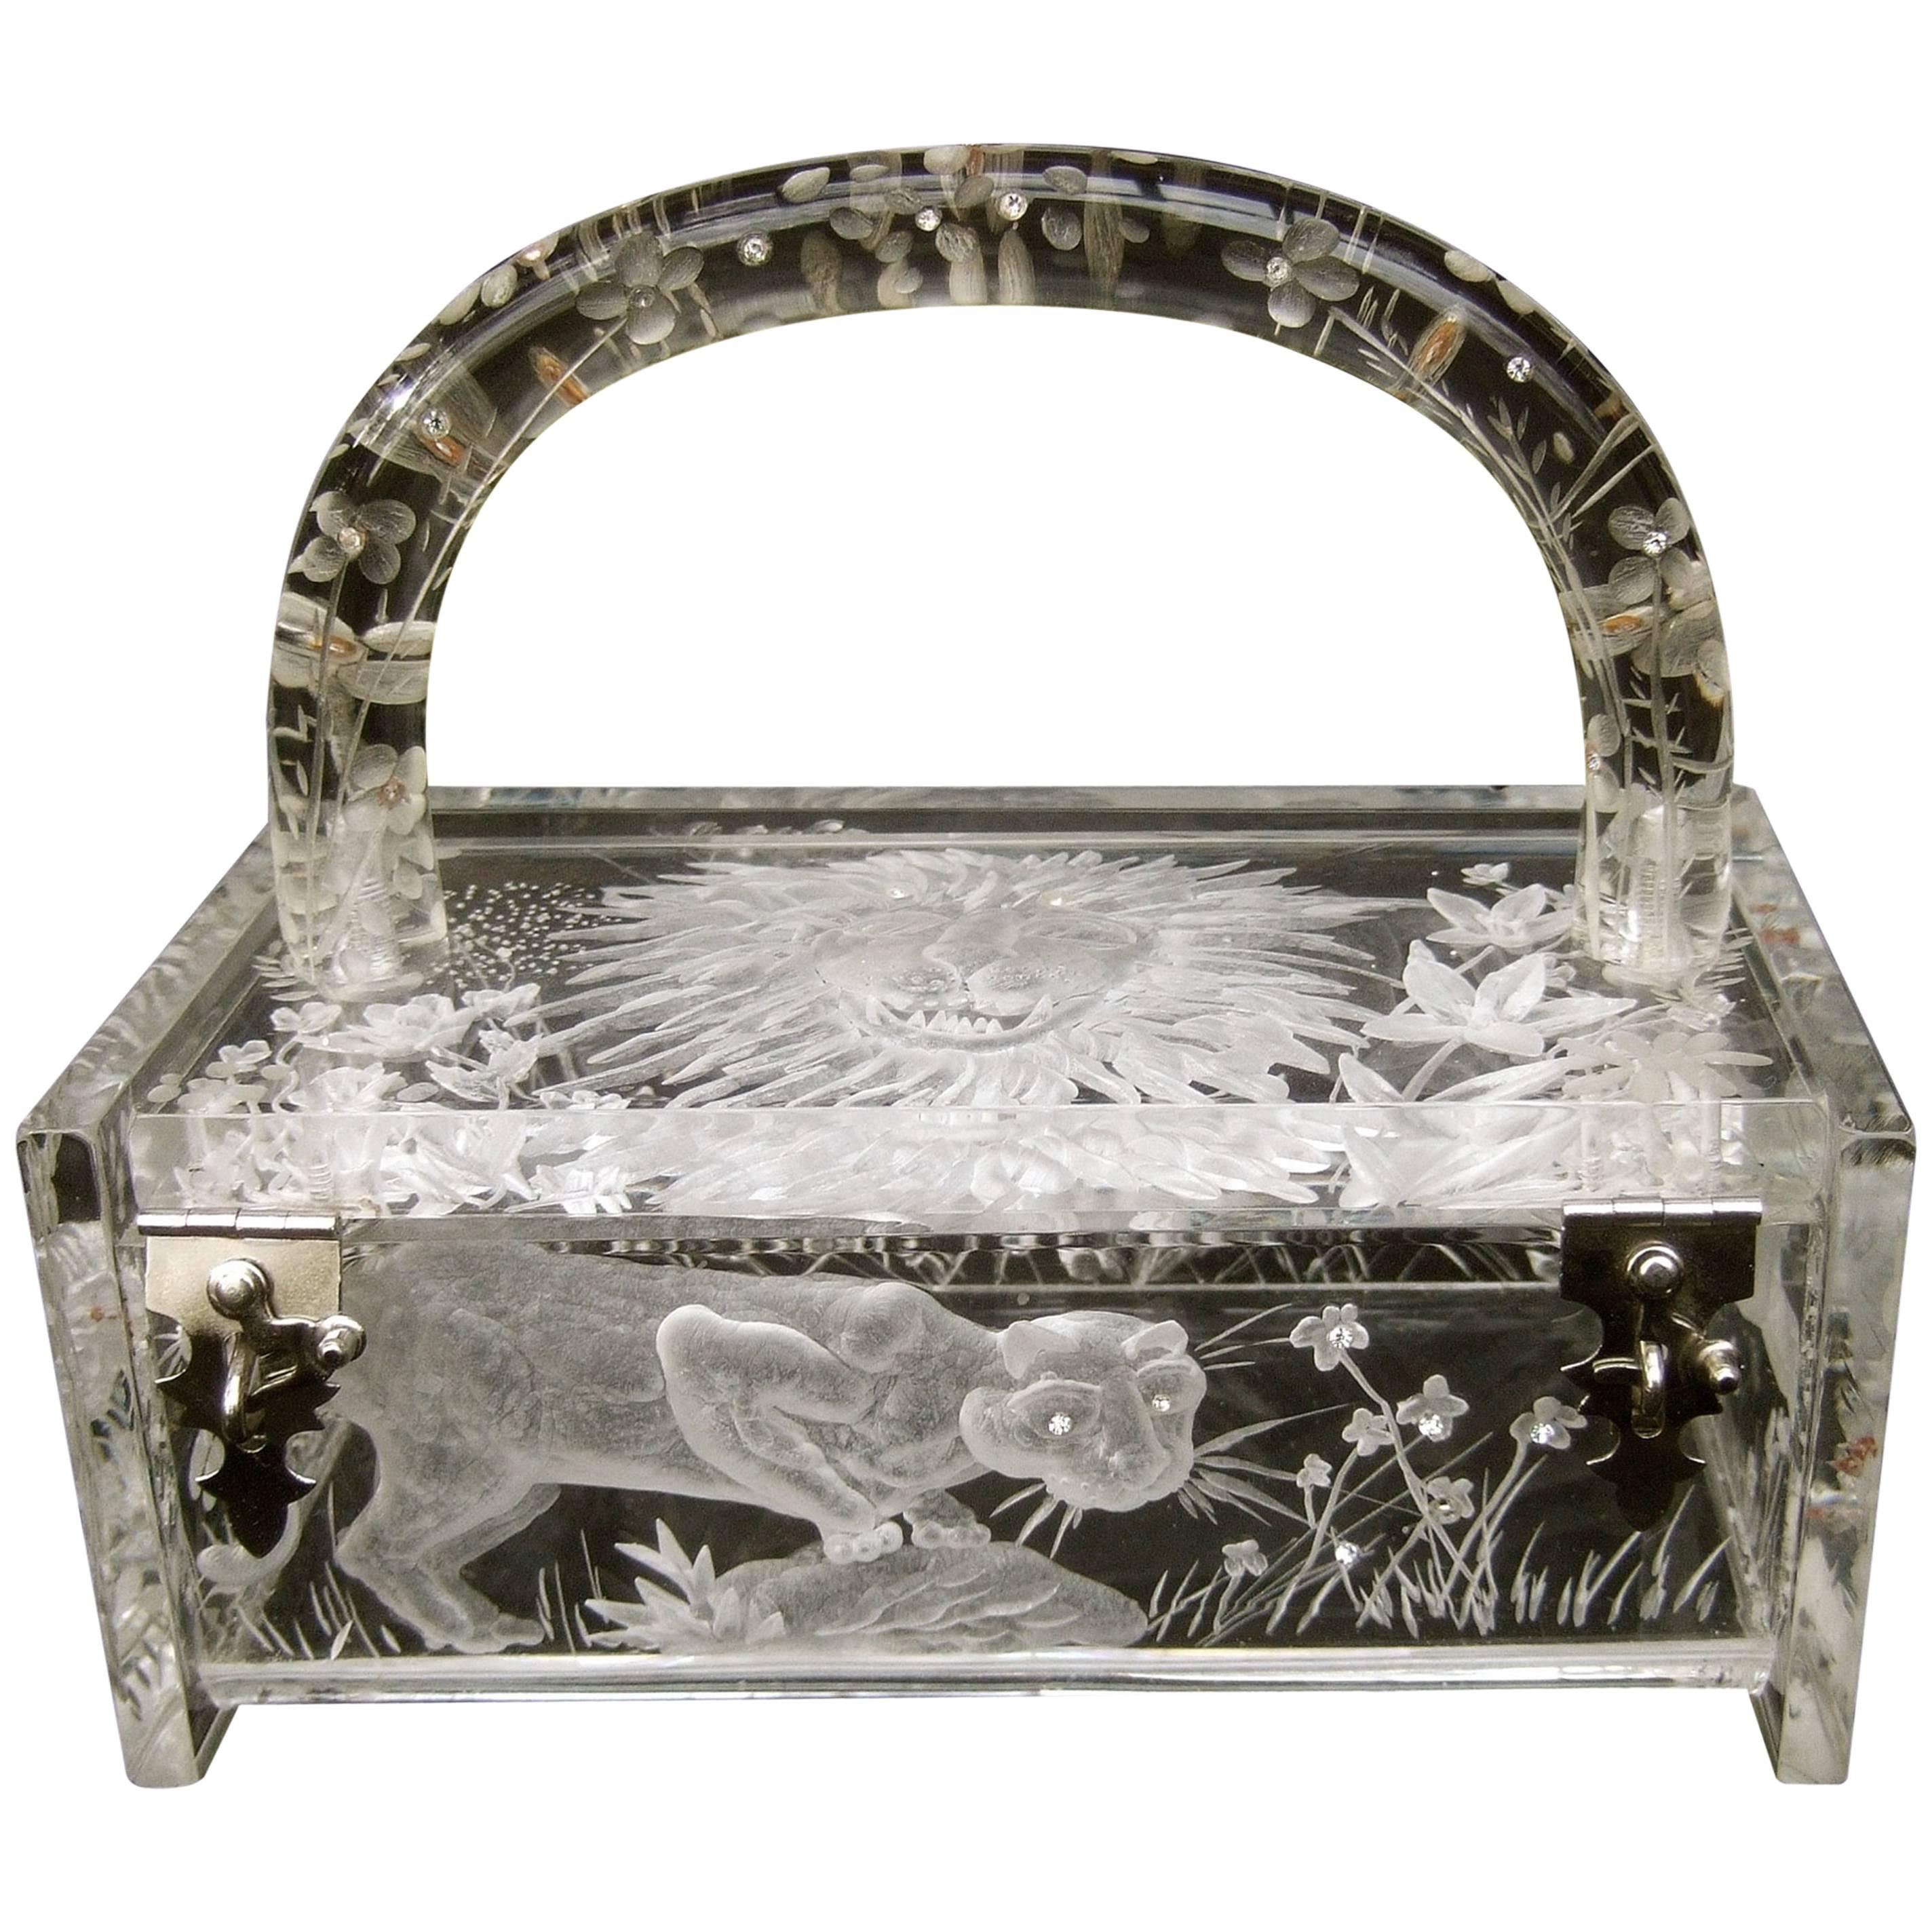 Museum Worthy Artisan Lucite Box Purse Designed by Joyce Francis 